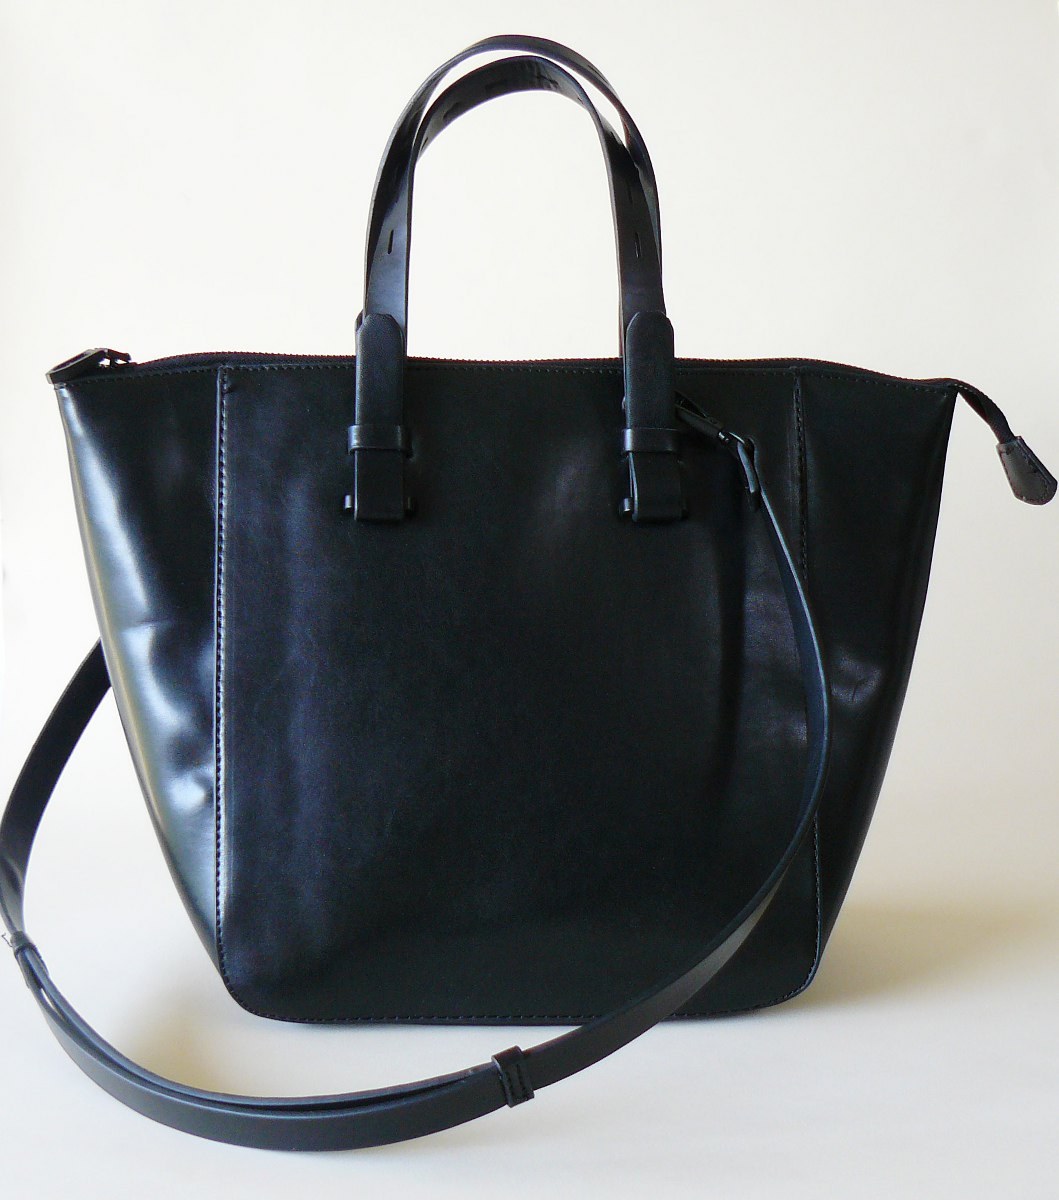 Zara Black Faux Leather Tote Shopper Shoulder Bag Vegan Friendly - Handbags & Purses